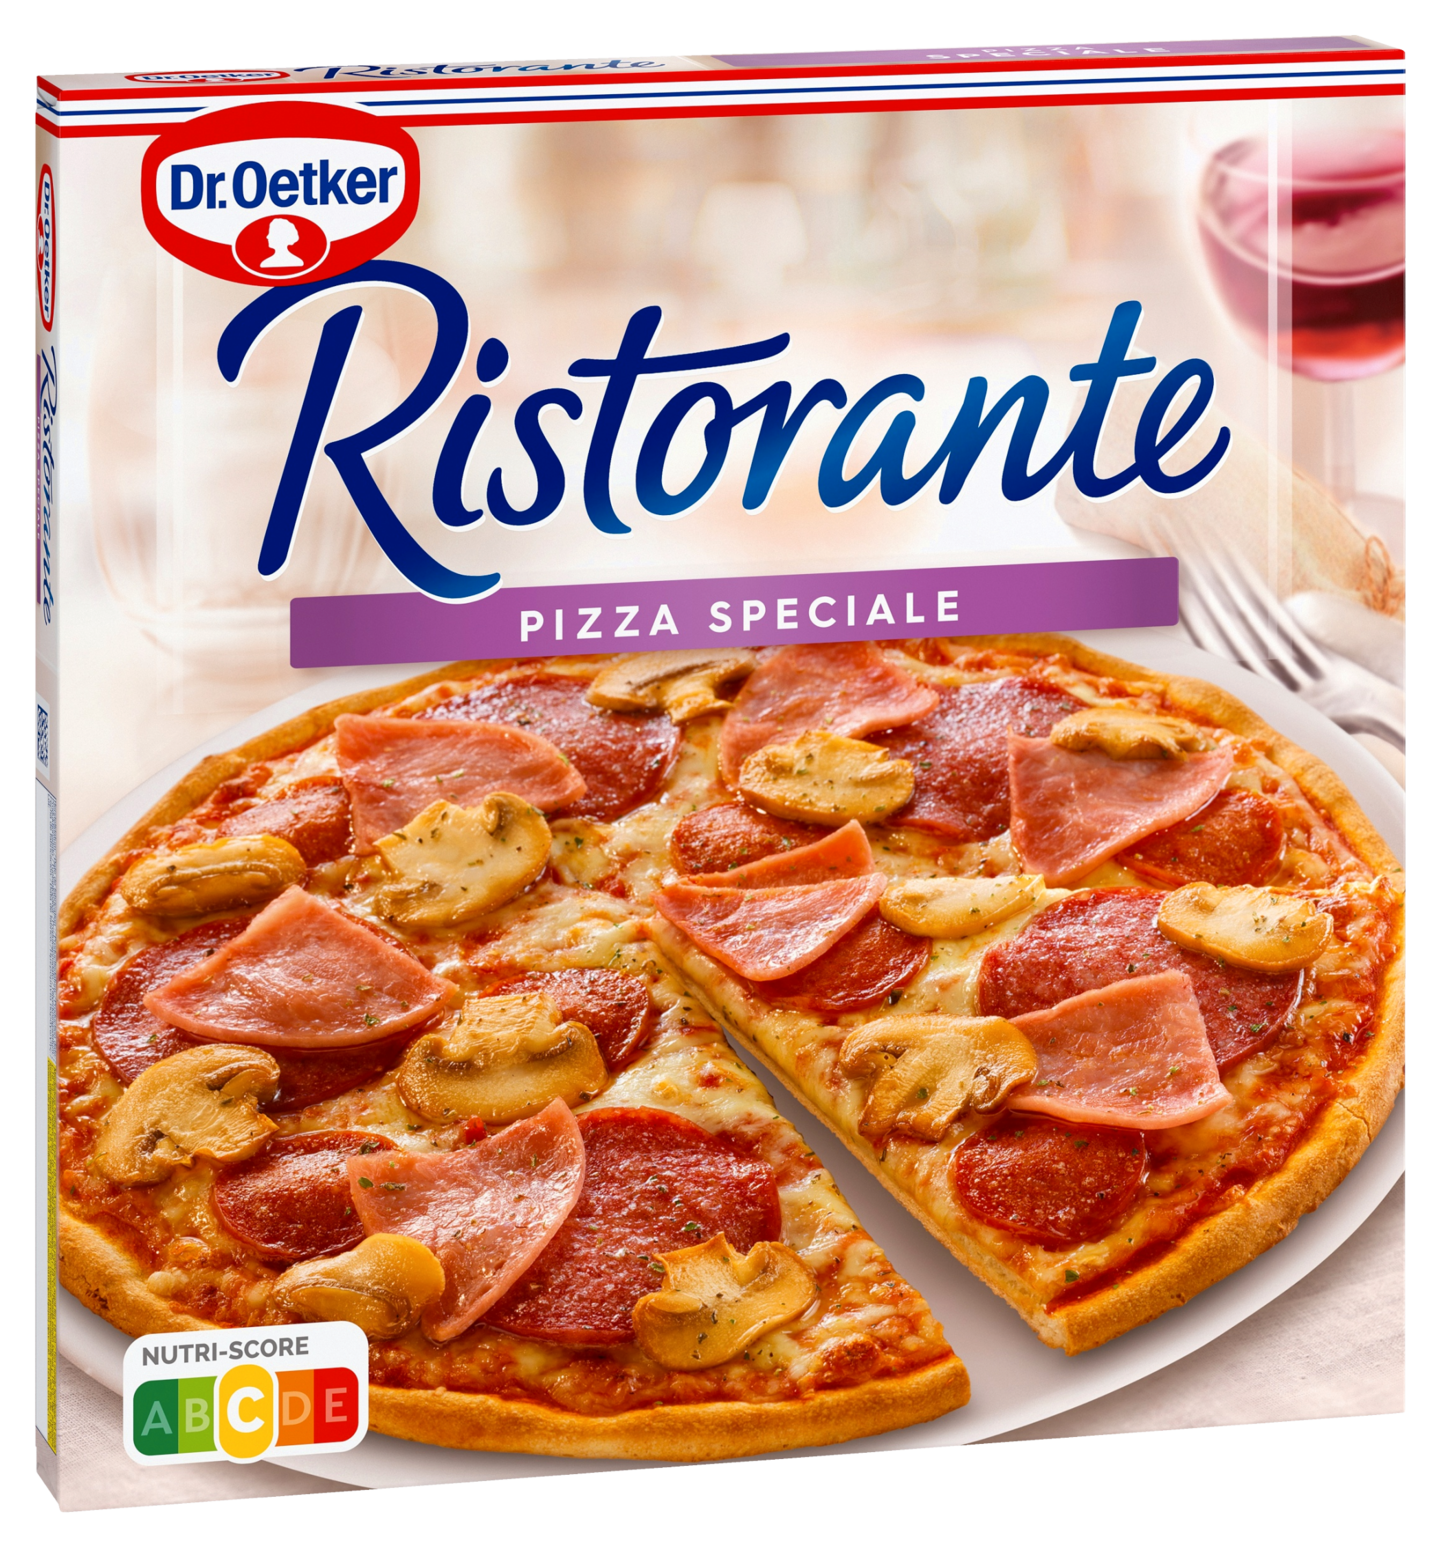 Dr. Oetker Ristorante speciale pizza 345g pakaste